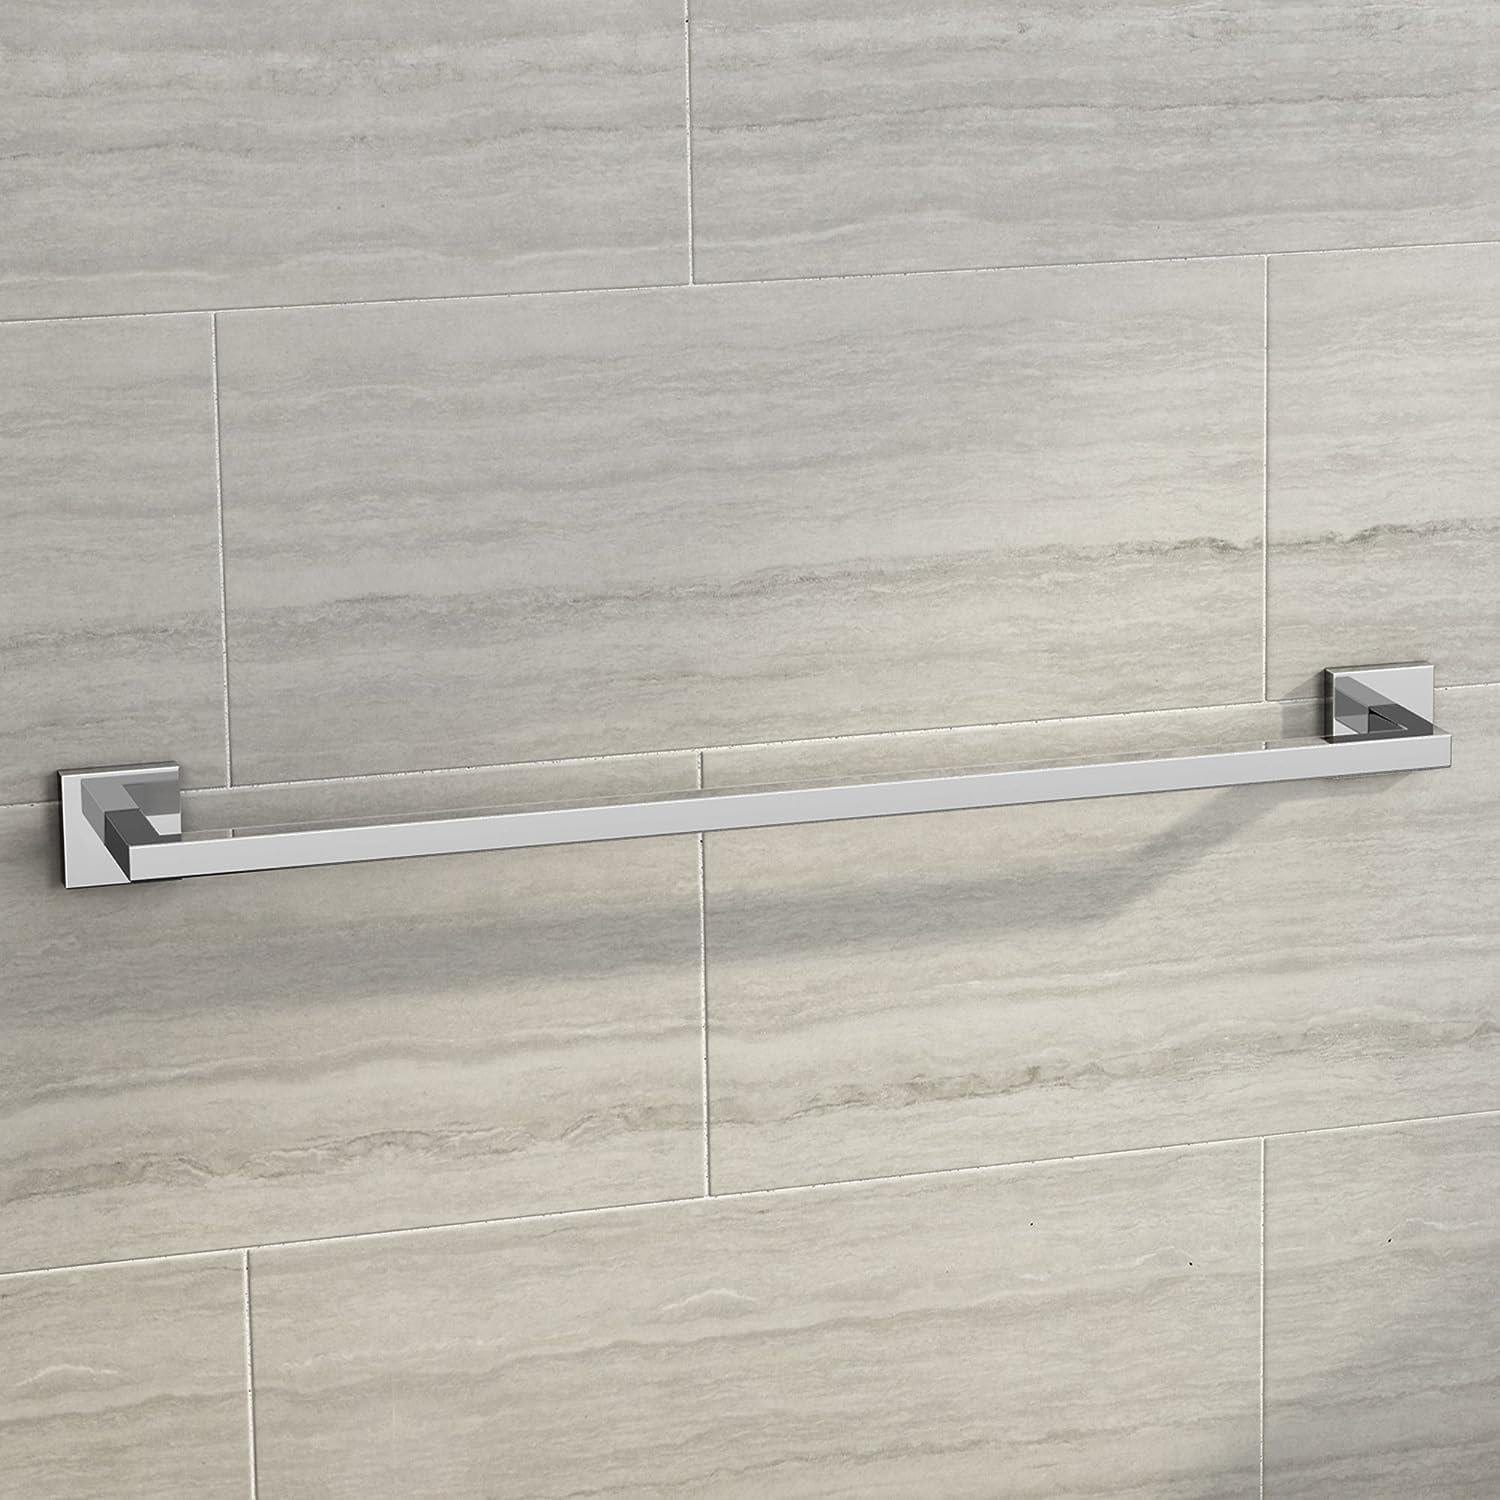 iBathUK Modern Towel Rail Bar Wall Mounted Square Bathroom Accessory Chrome